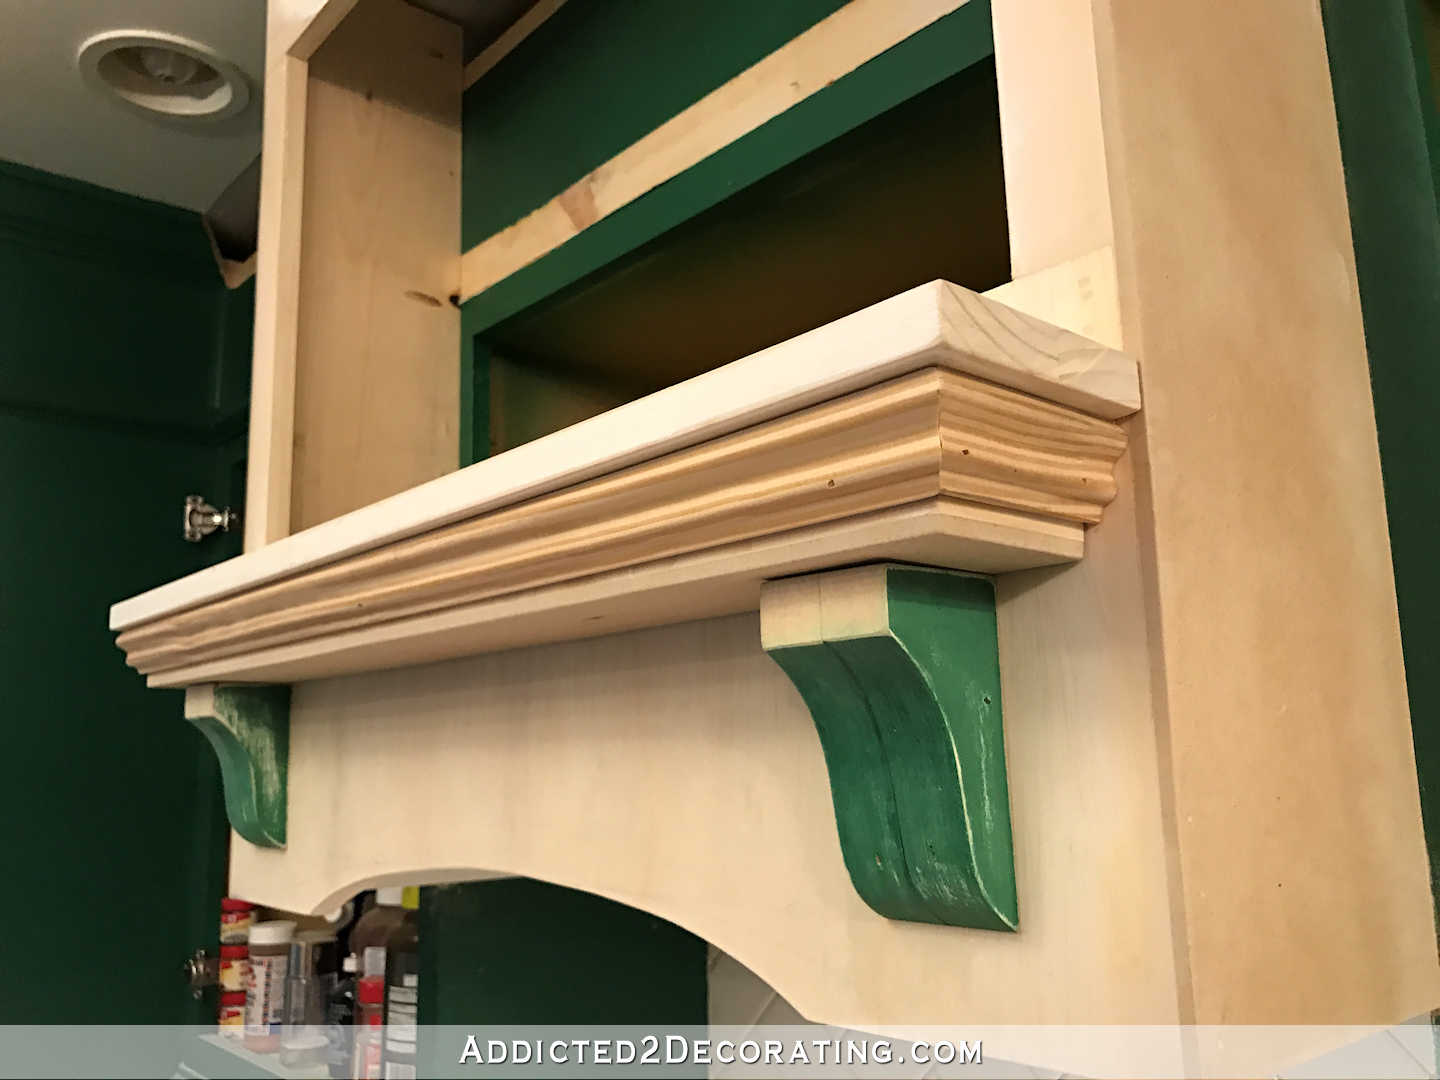 how to build a custom wood range hood cover - 26 - add decorative trim under shelf